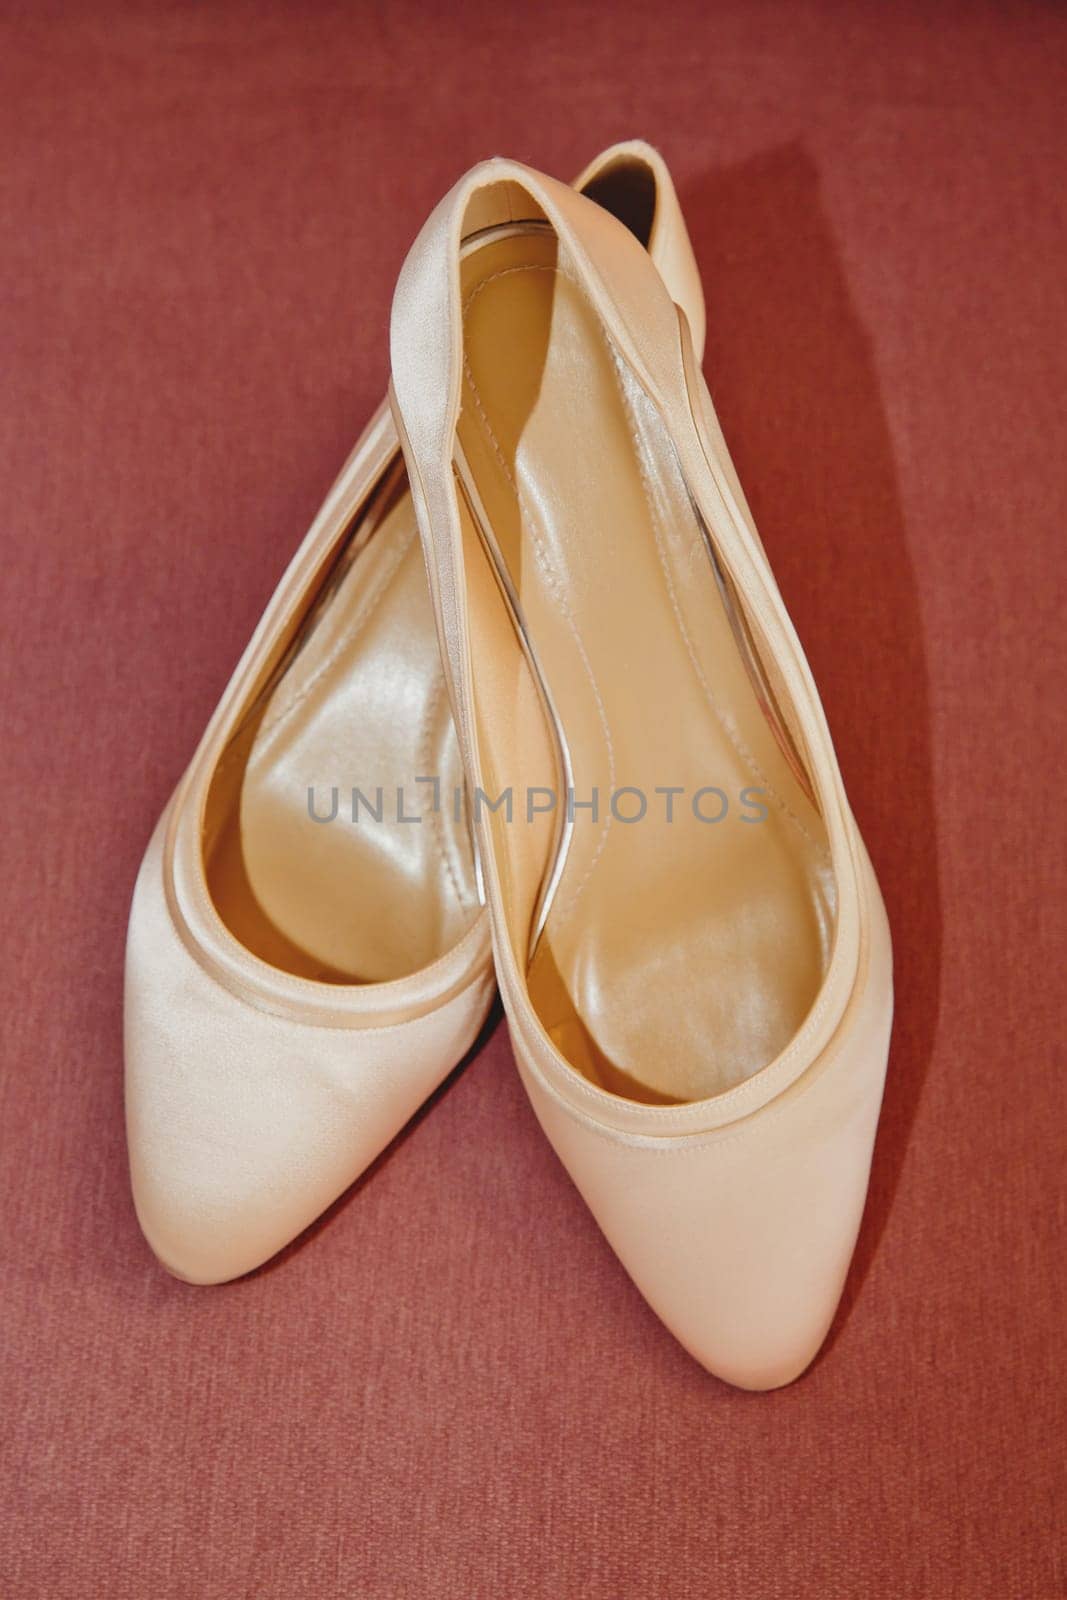 Women's shoes of the bride. Soft focus. by leonik